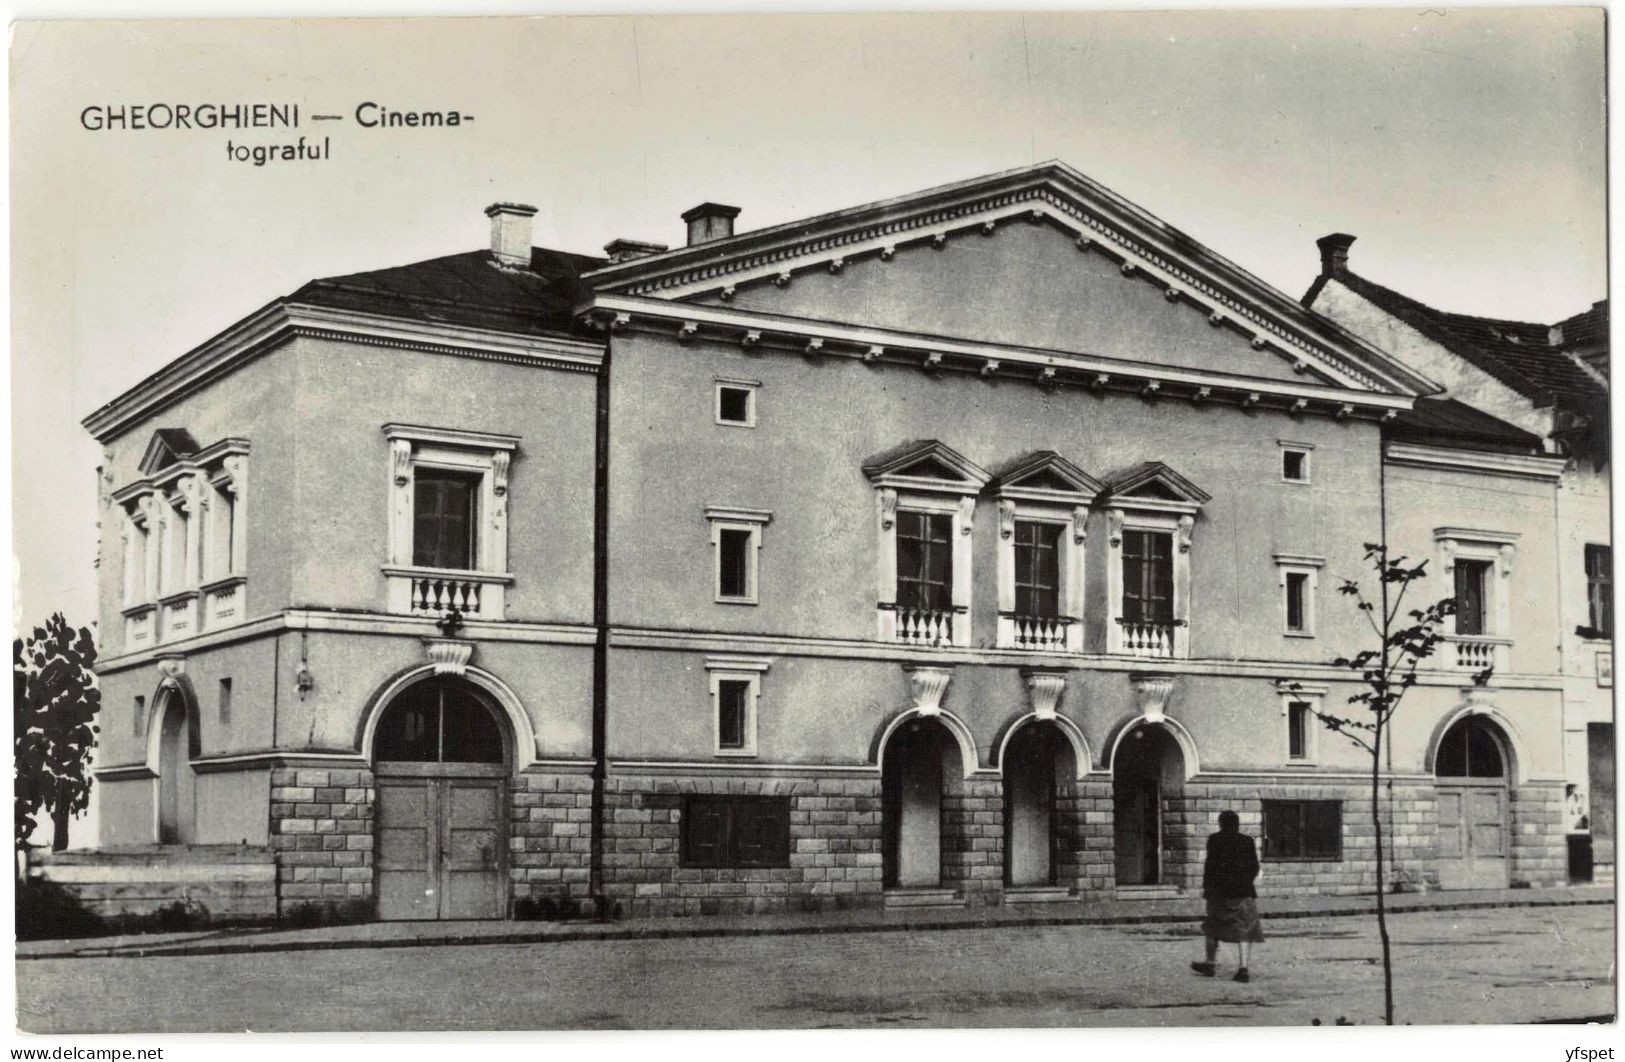 Gheorghieni - Cinema Hall - Romania